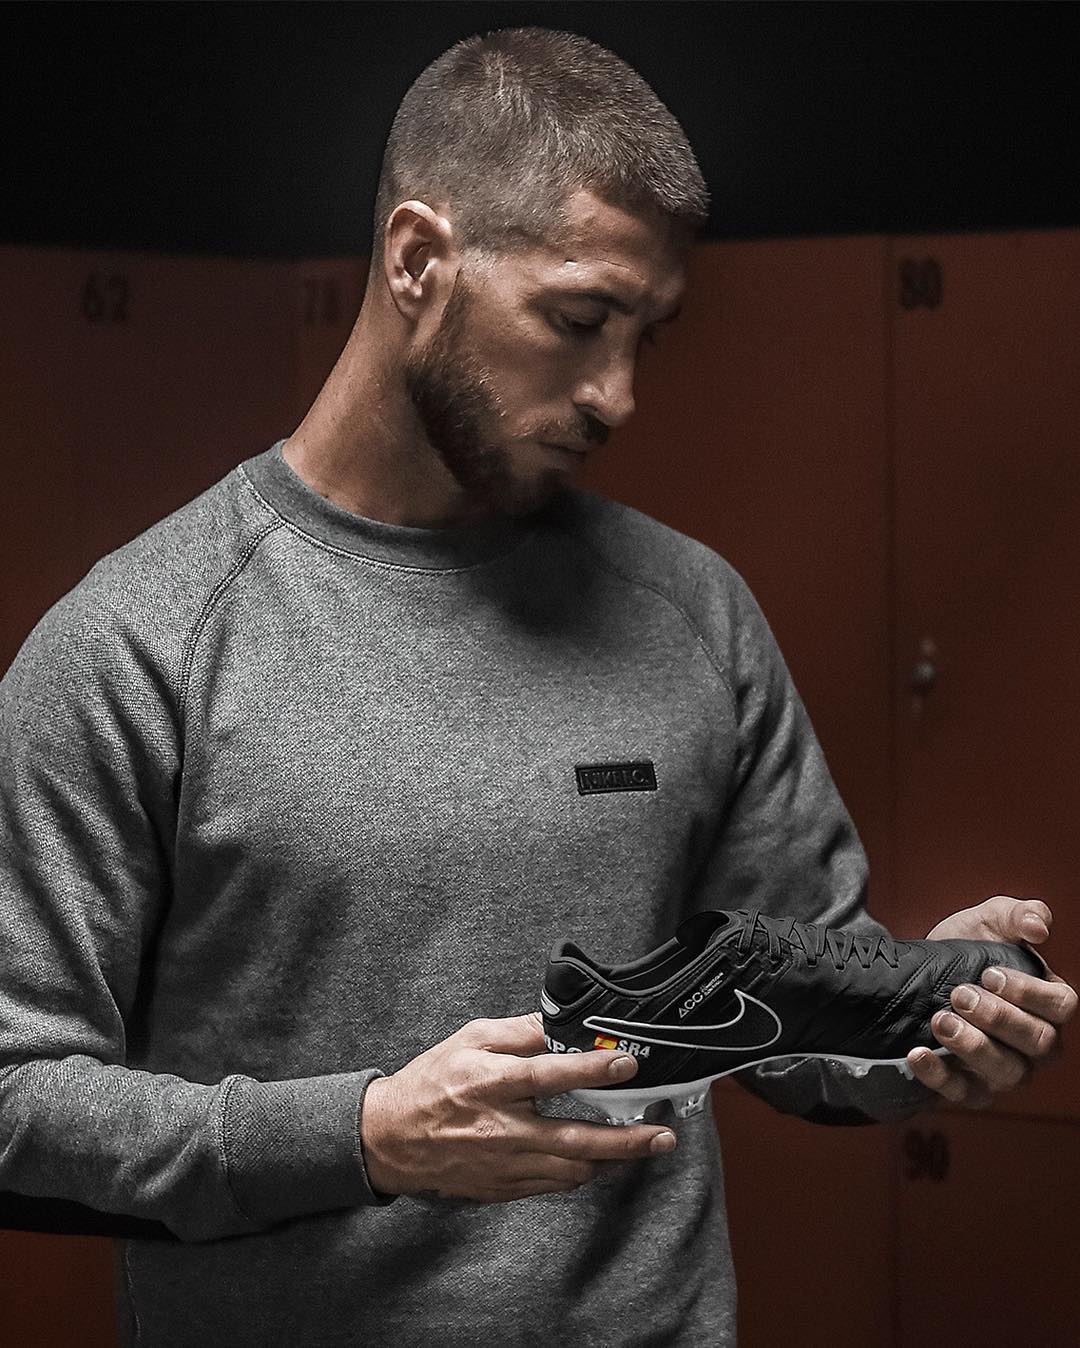 Nike Tiempo Sergio Ramos Boots Revealed - Footy Headlines